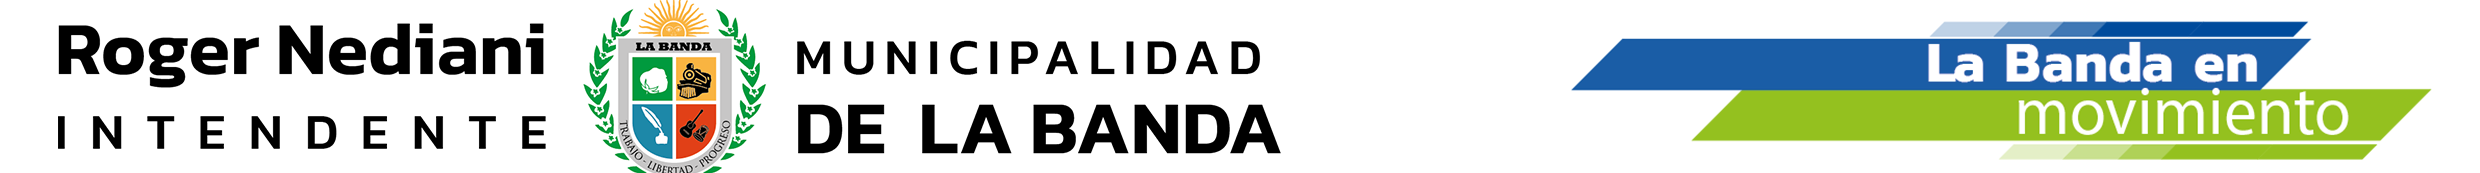 Municipalidad de La Banda – Ing. Roger Nediani Intendente